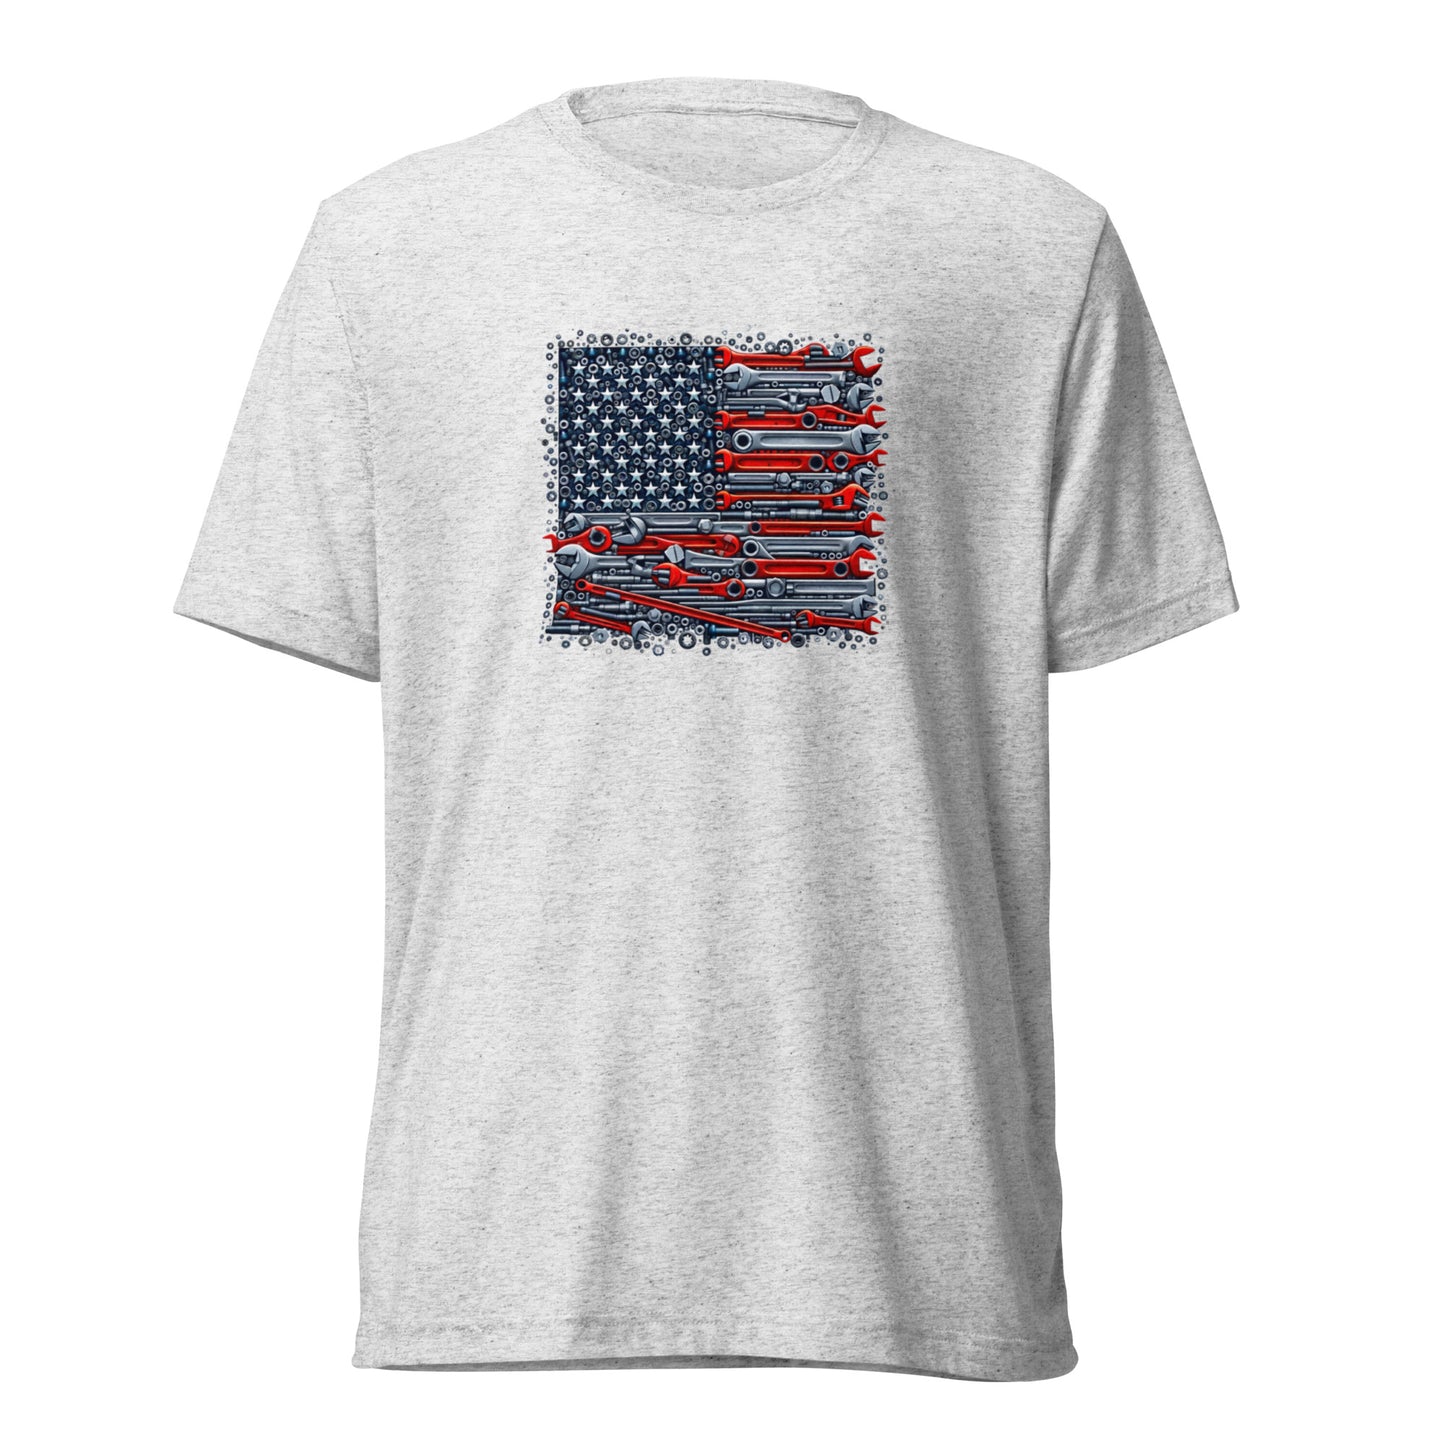 Build America Unisex T-Shirt